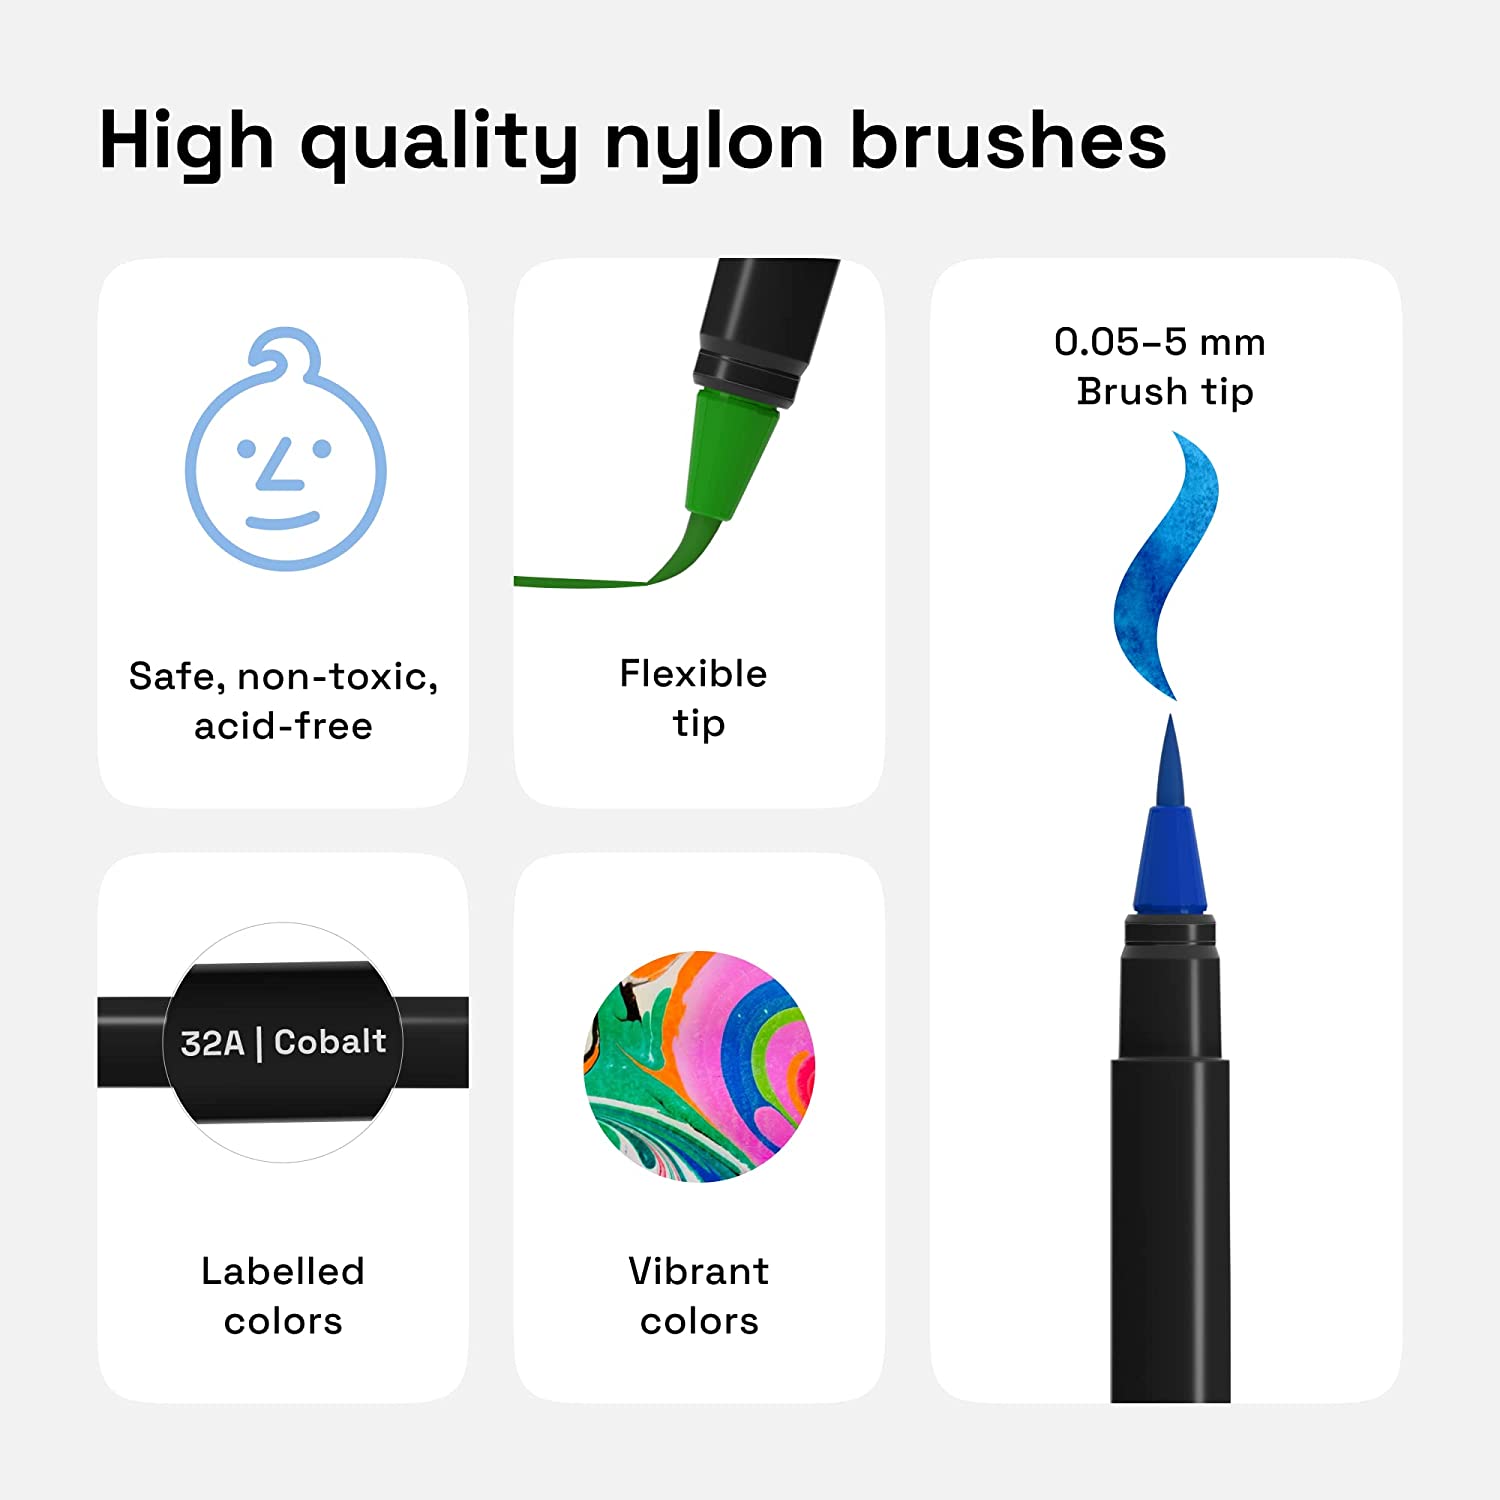 high quality nylon brushes